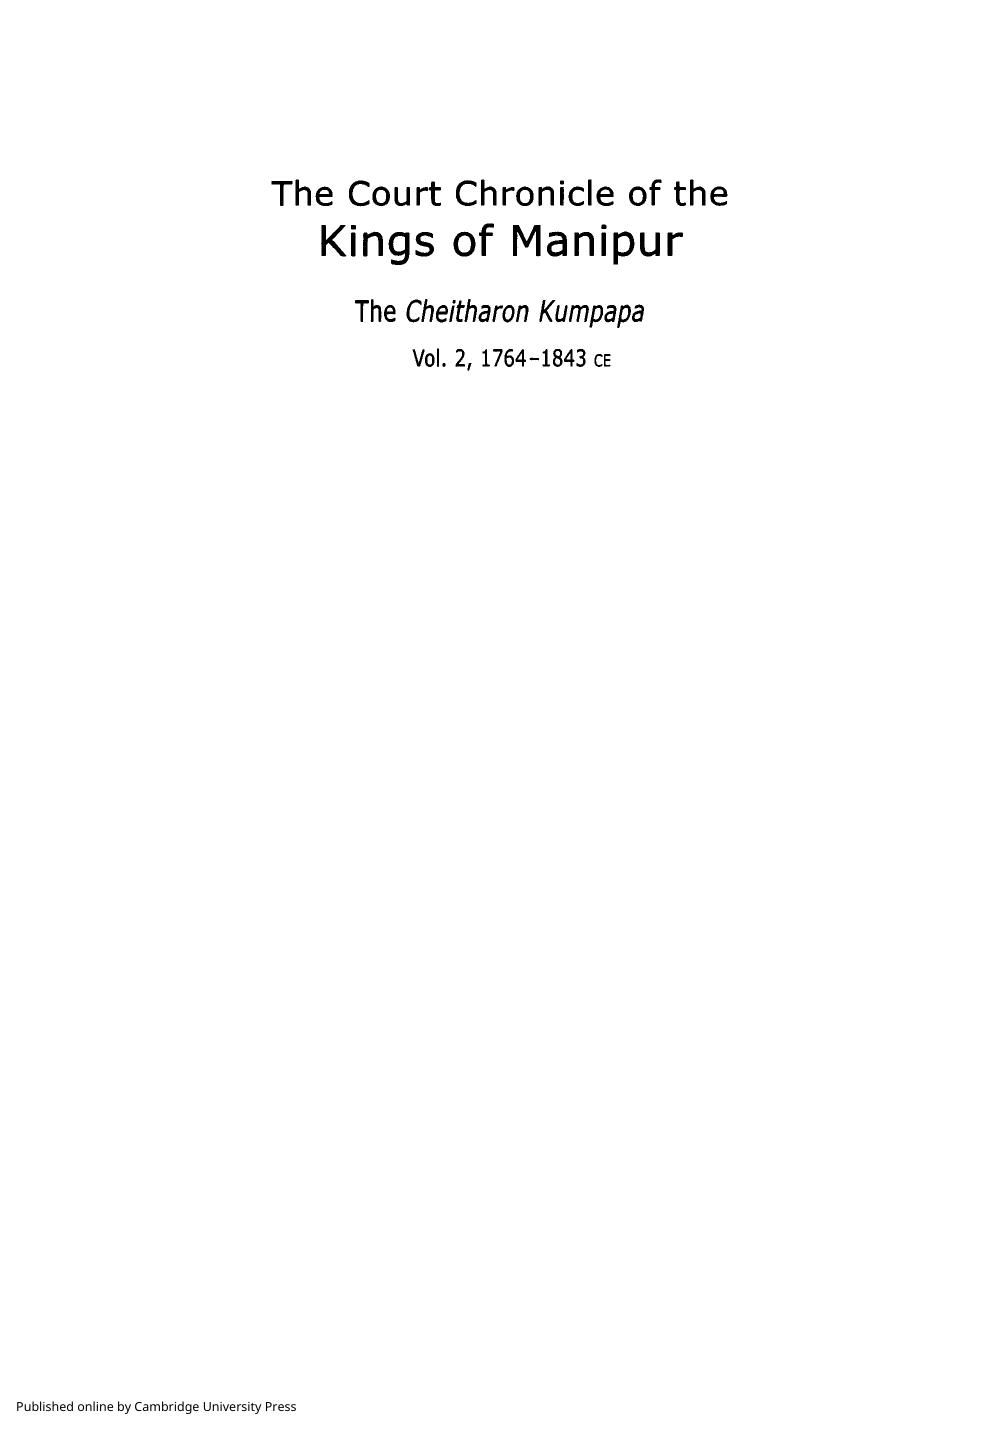 The Court Chronicle of the Kings of Manipur: Volume 2, The Cheitharon Kumpapa by Saroj Nalini Arambam Parratt